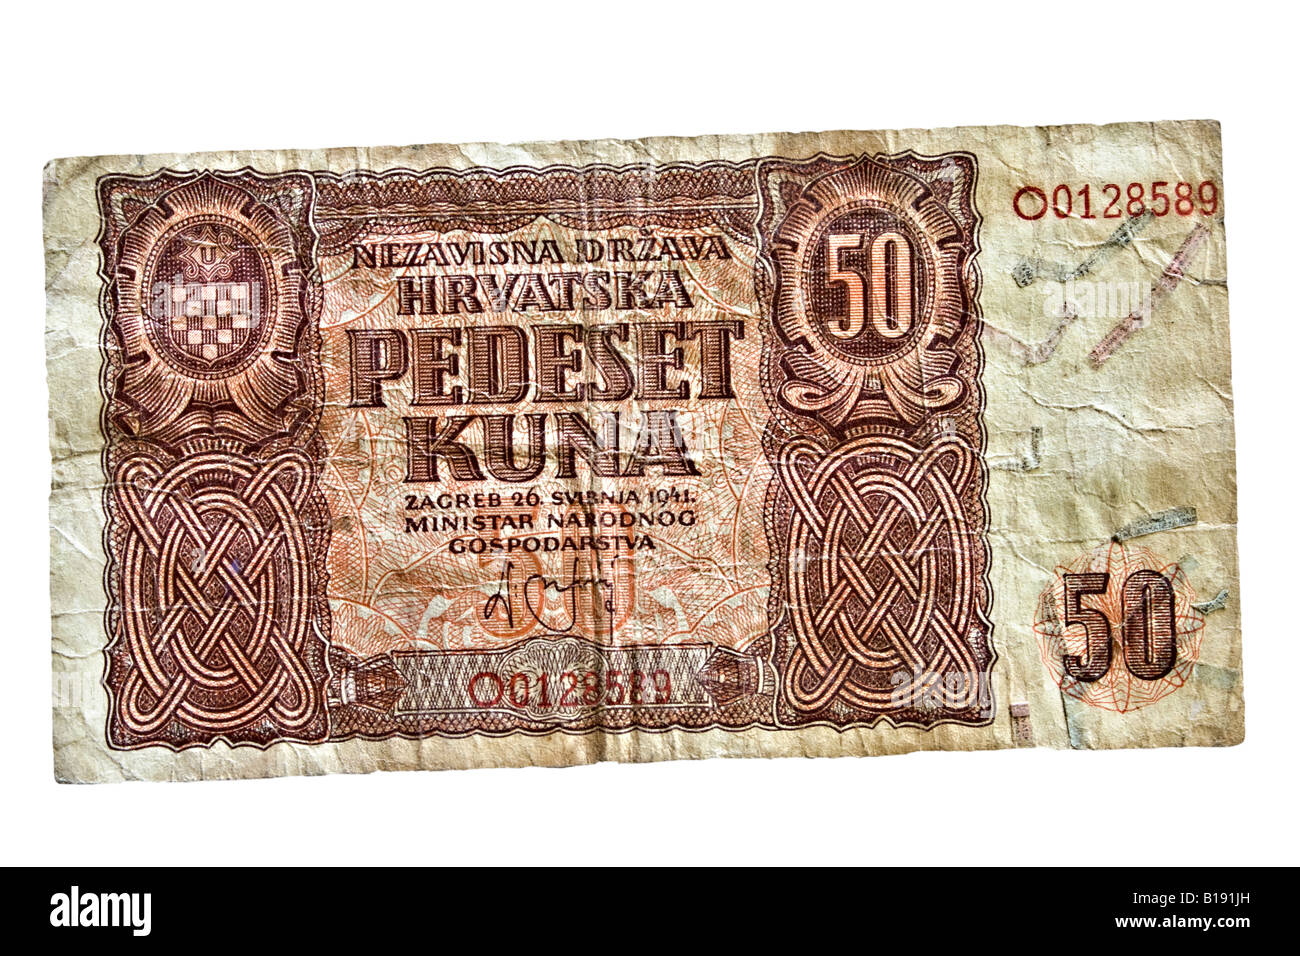 50 Croatian kuna banknote from the year 1941 Stock Photo